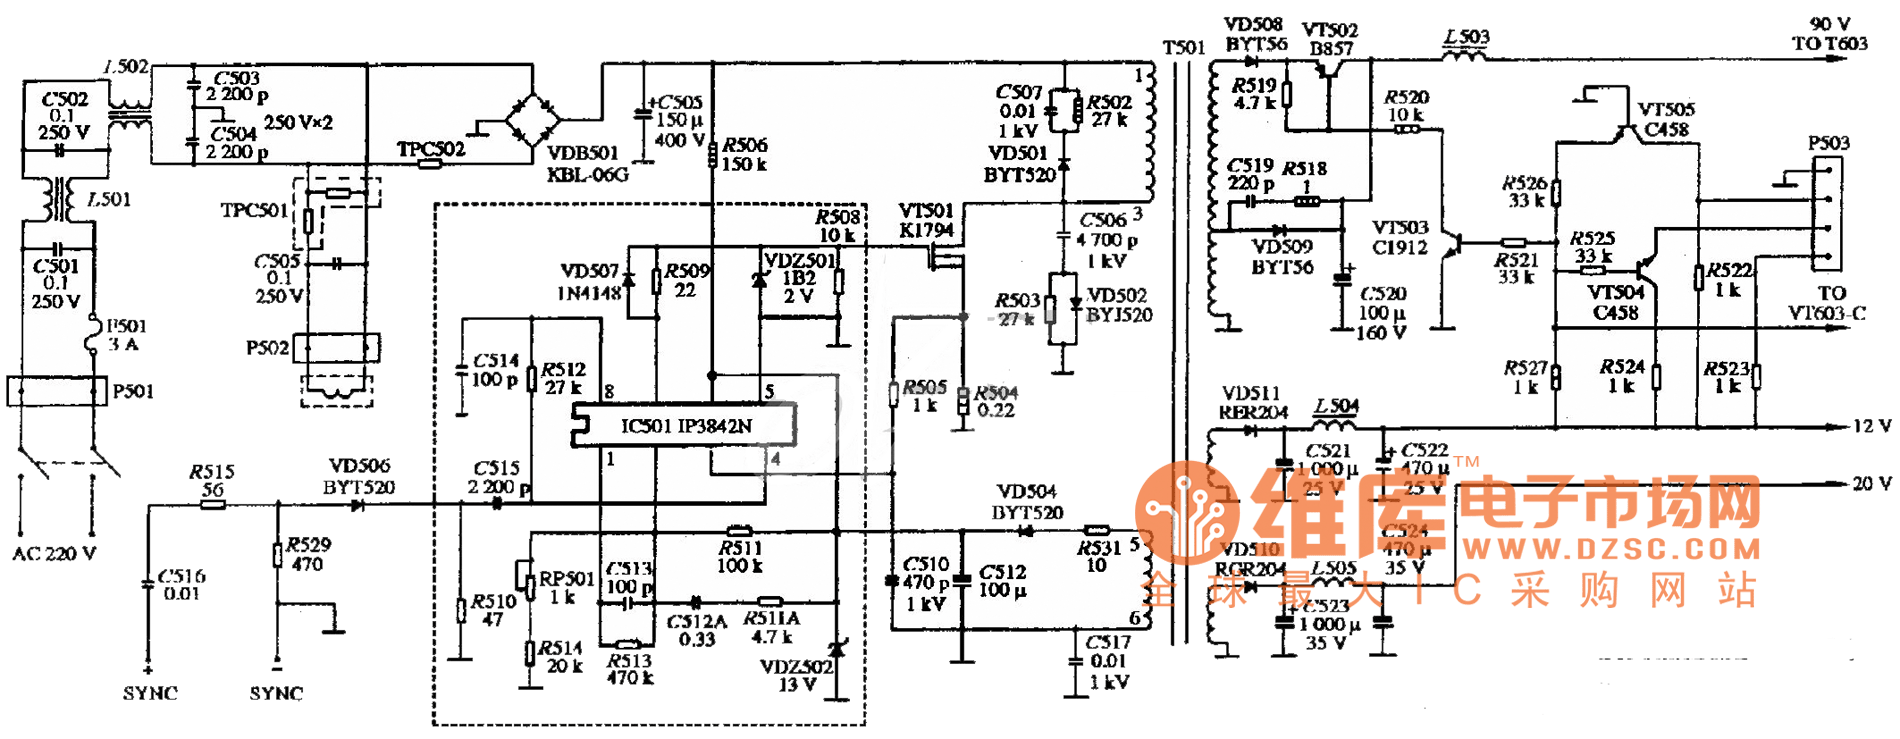 SUPERSYNC PWB-1537、 EM-1428二种机型彩色显示器的电源电路图